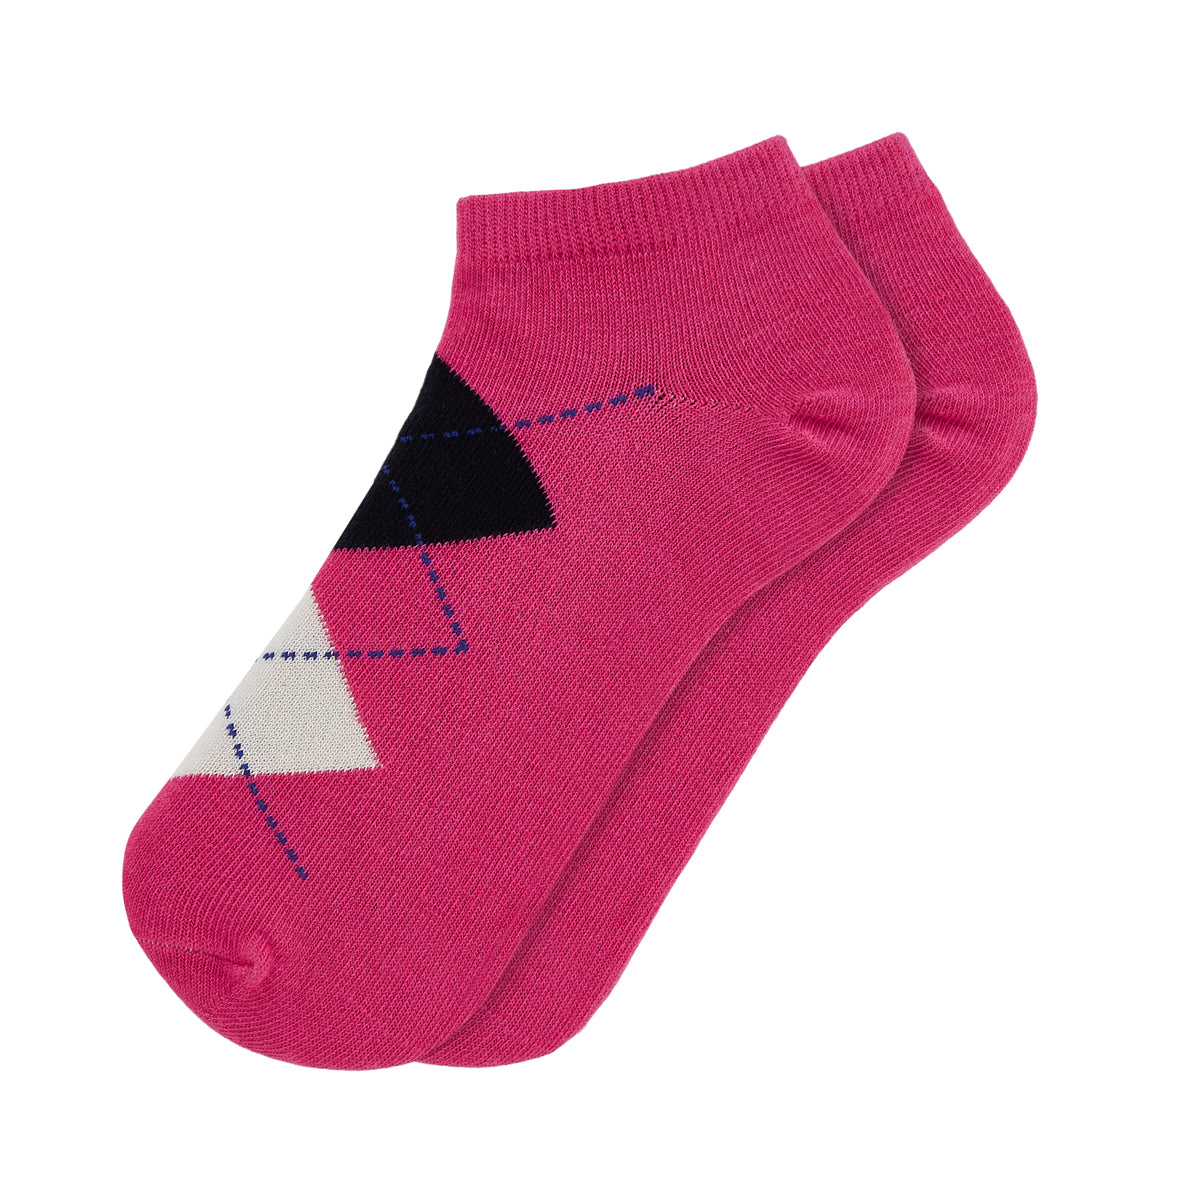 Womens Ankle Length Argyle Printed Socks 1.0